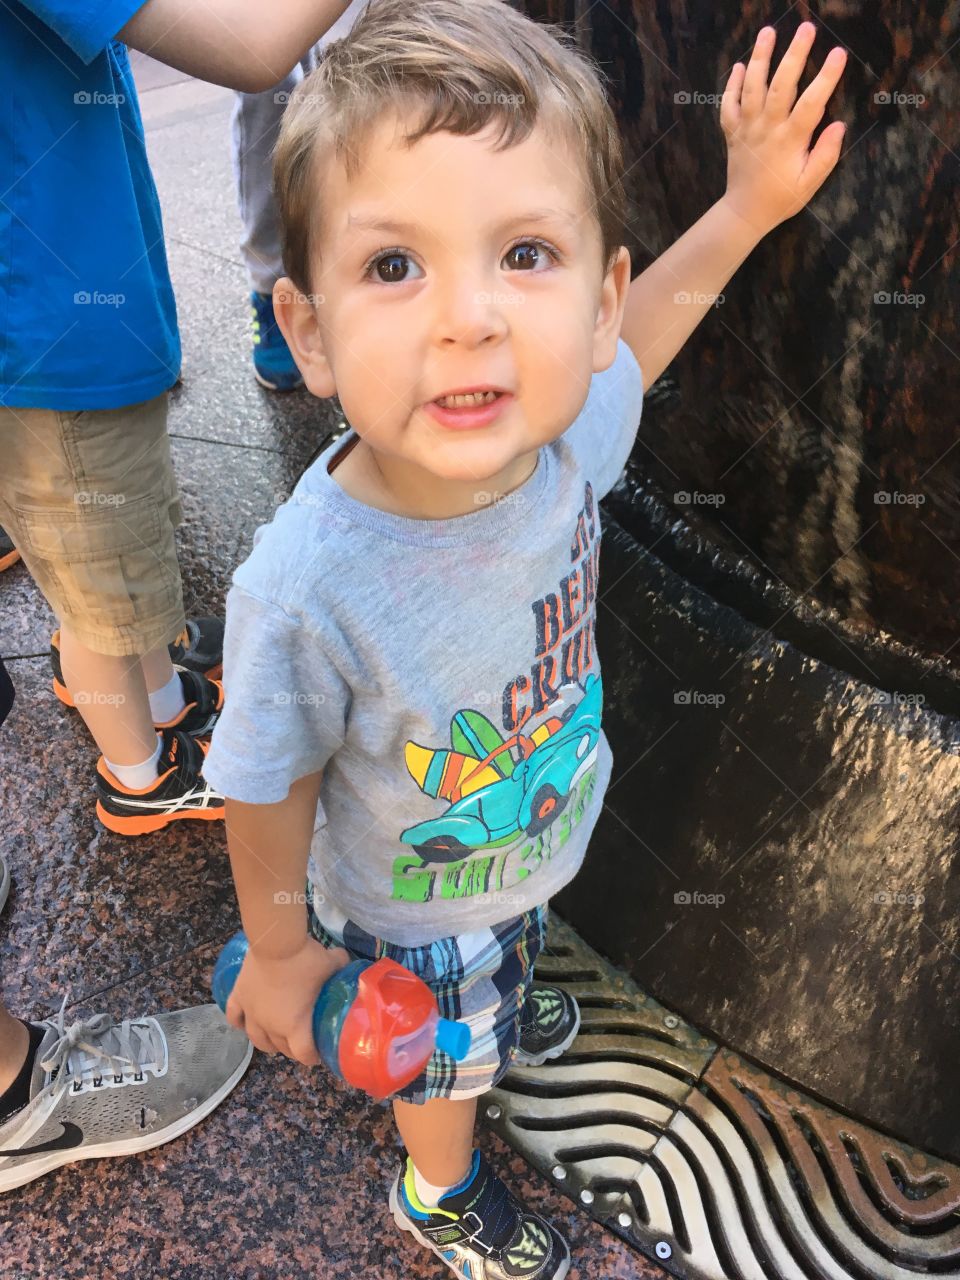 My son at Disneyland 